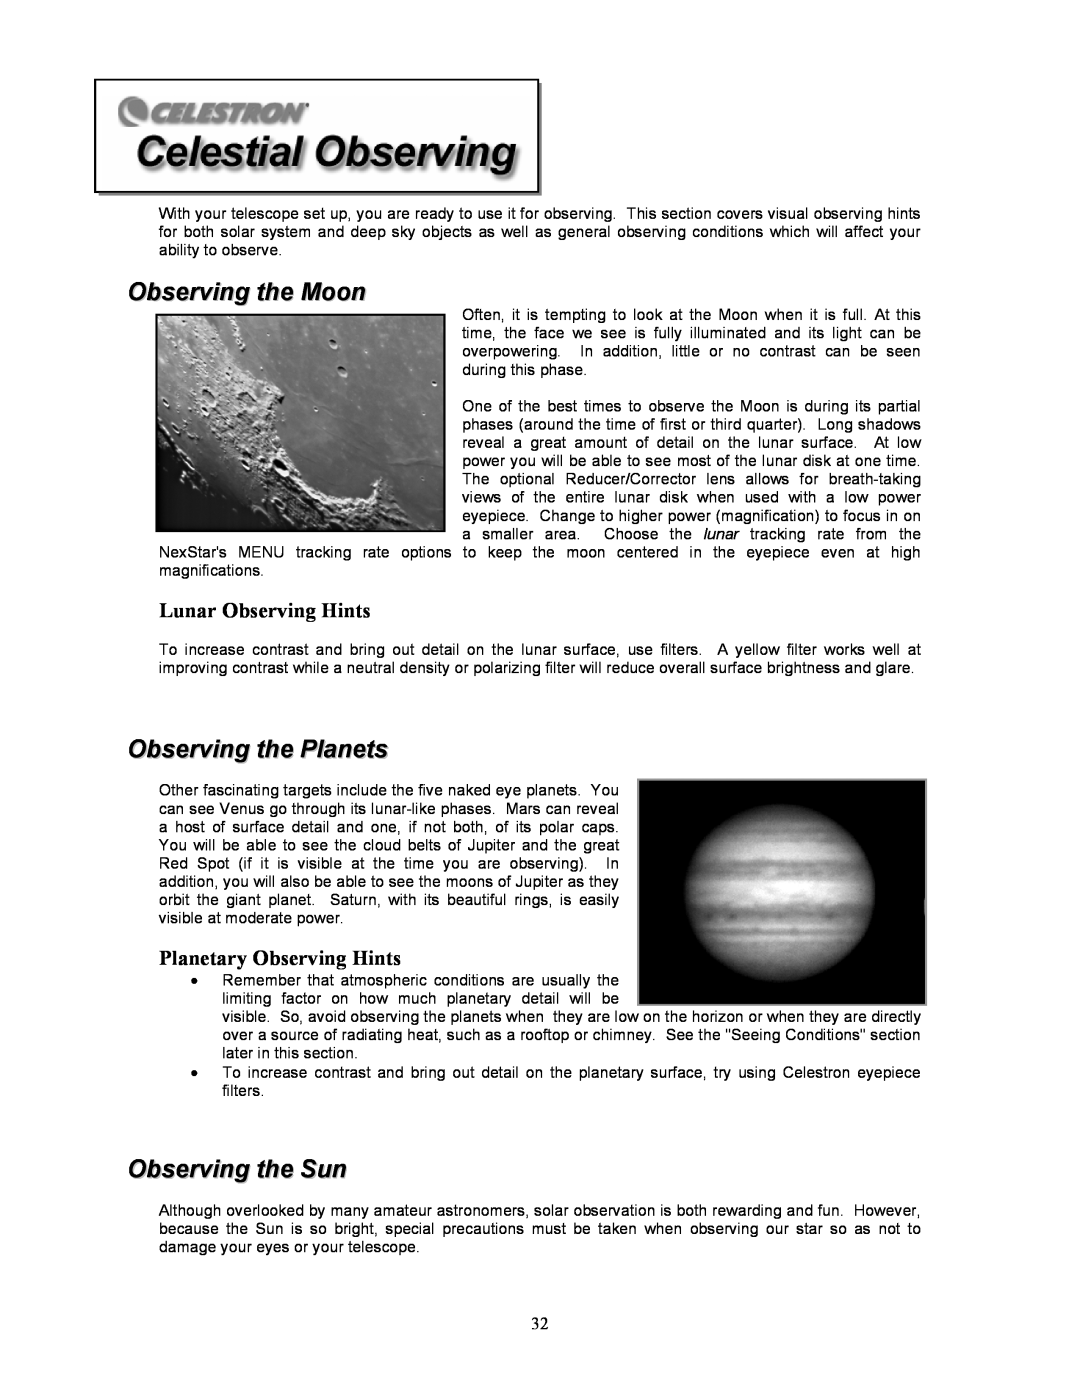 Celestron NexStar 8i manual Observing the Moon, Observing the Planets, Observing the Sun, Lunar Observing Hints 